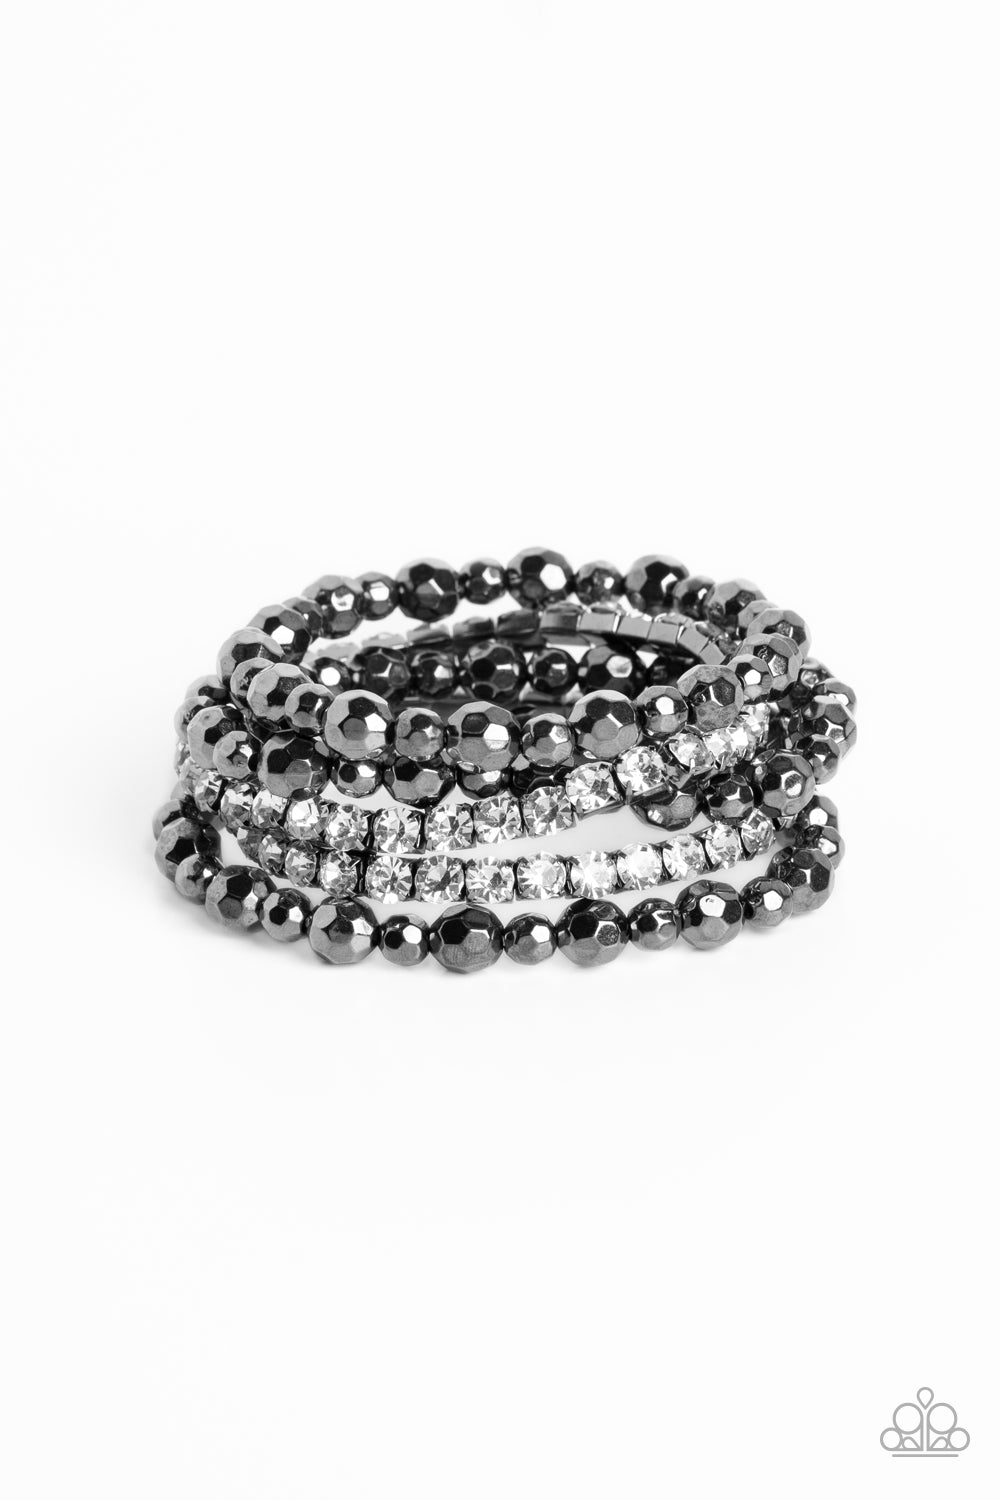 Top Notch Twinkle - black - Paparazzi bracelet